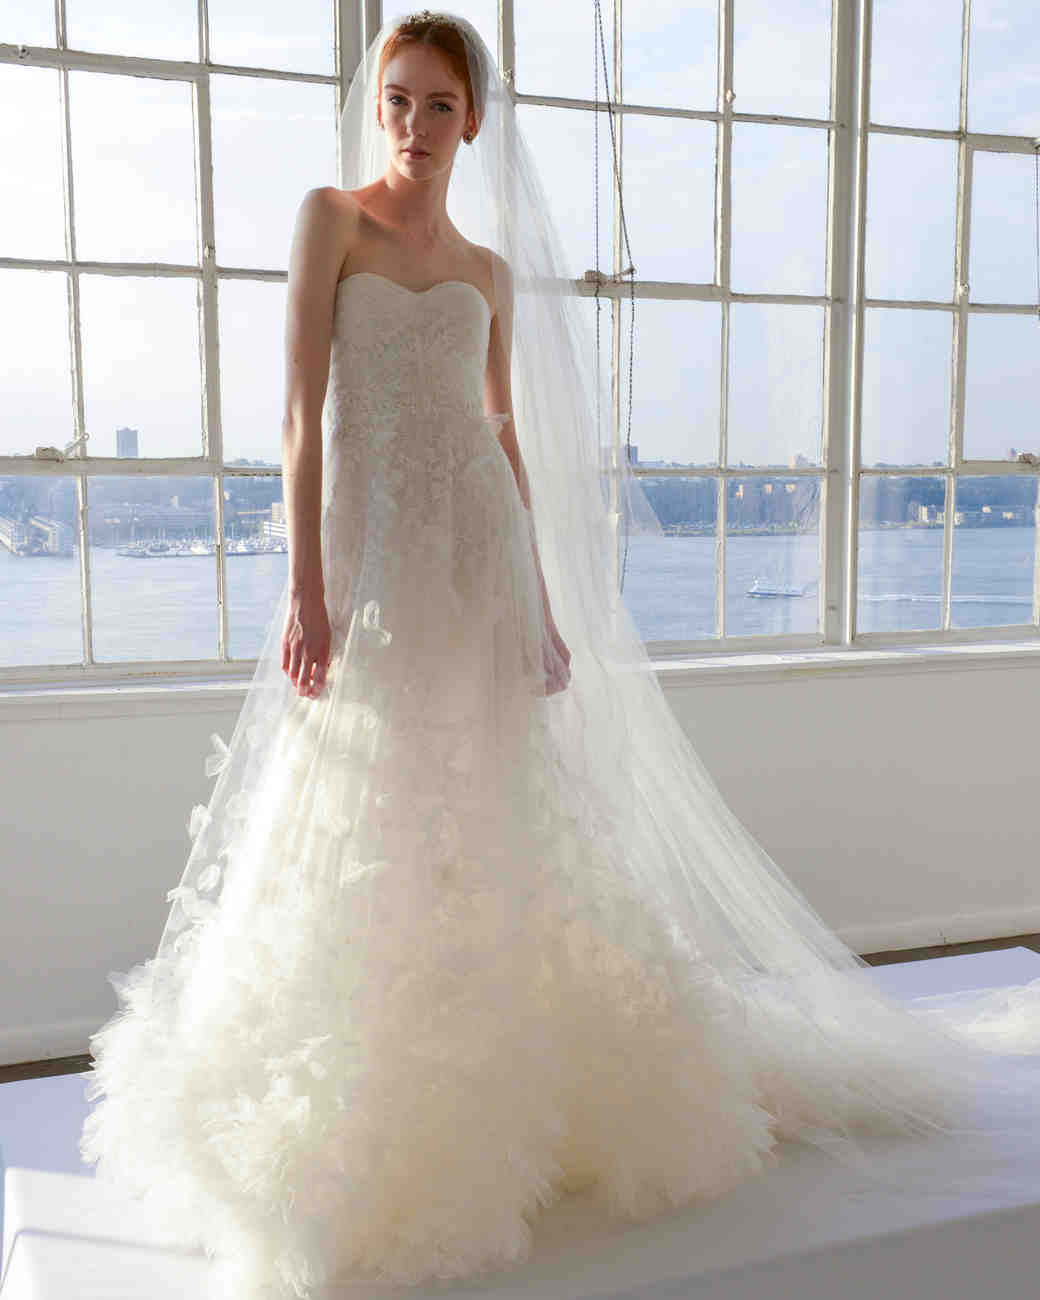 Image 85 of Lorelai Gilmore Wedding Dress | mmvdnisyst